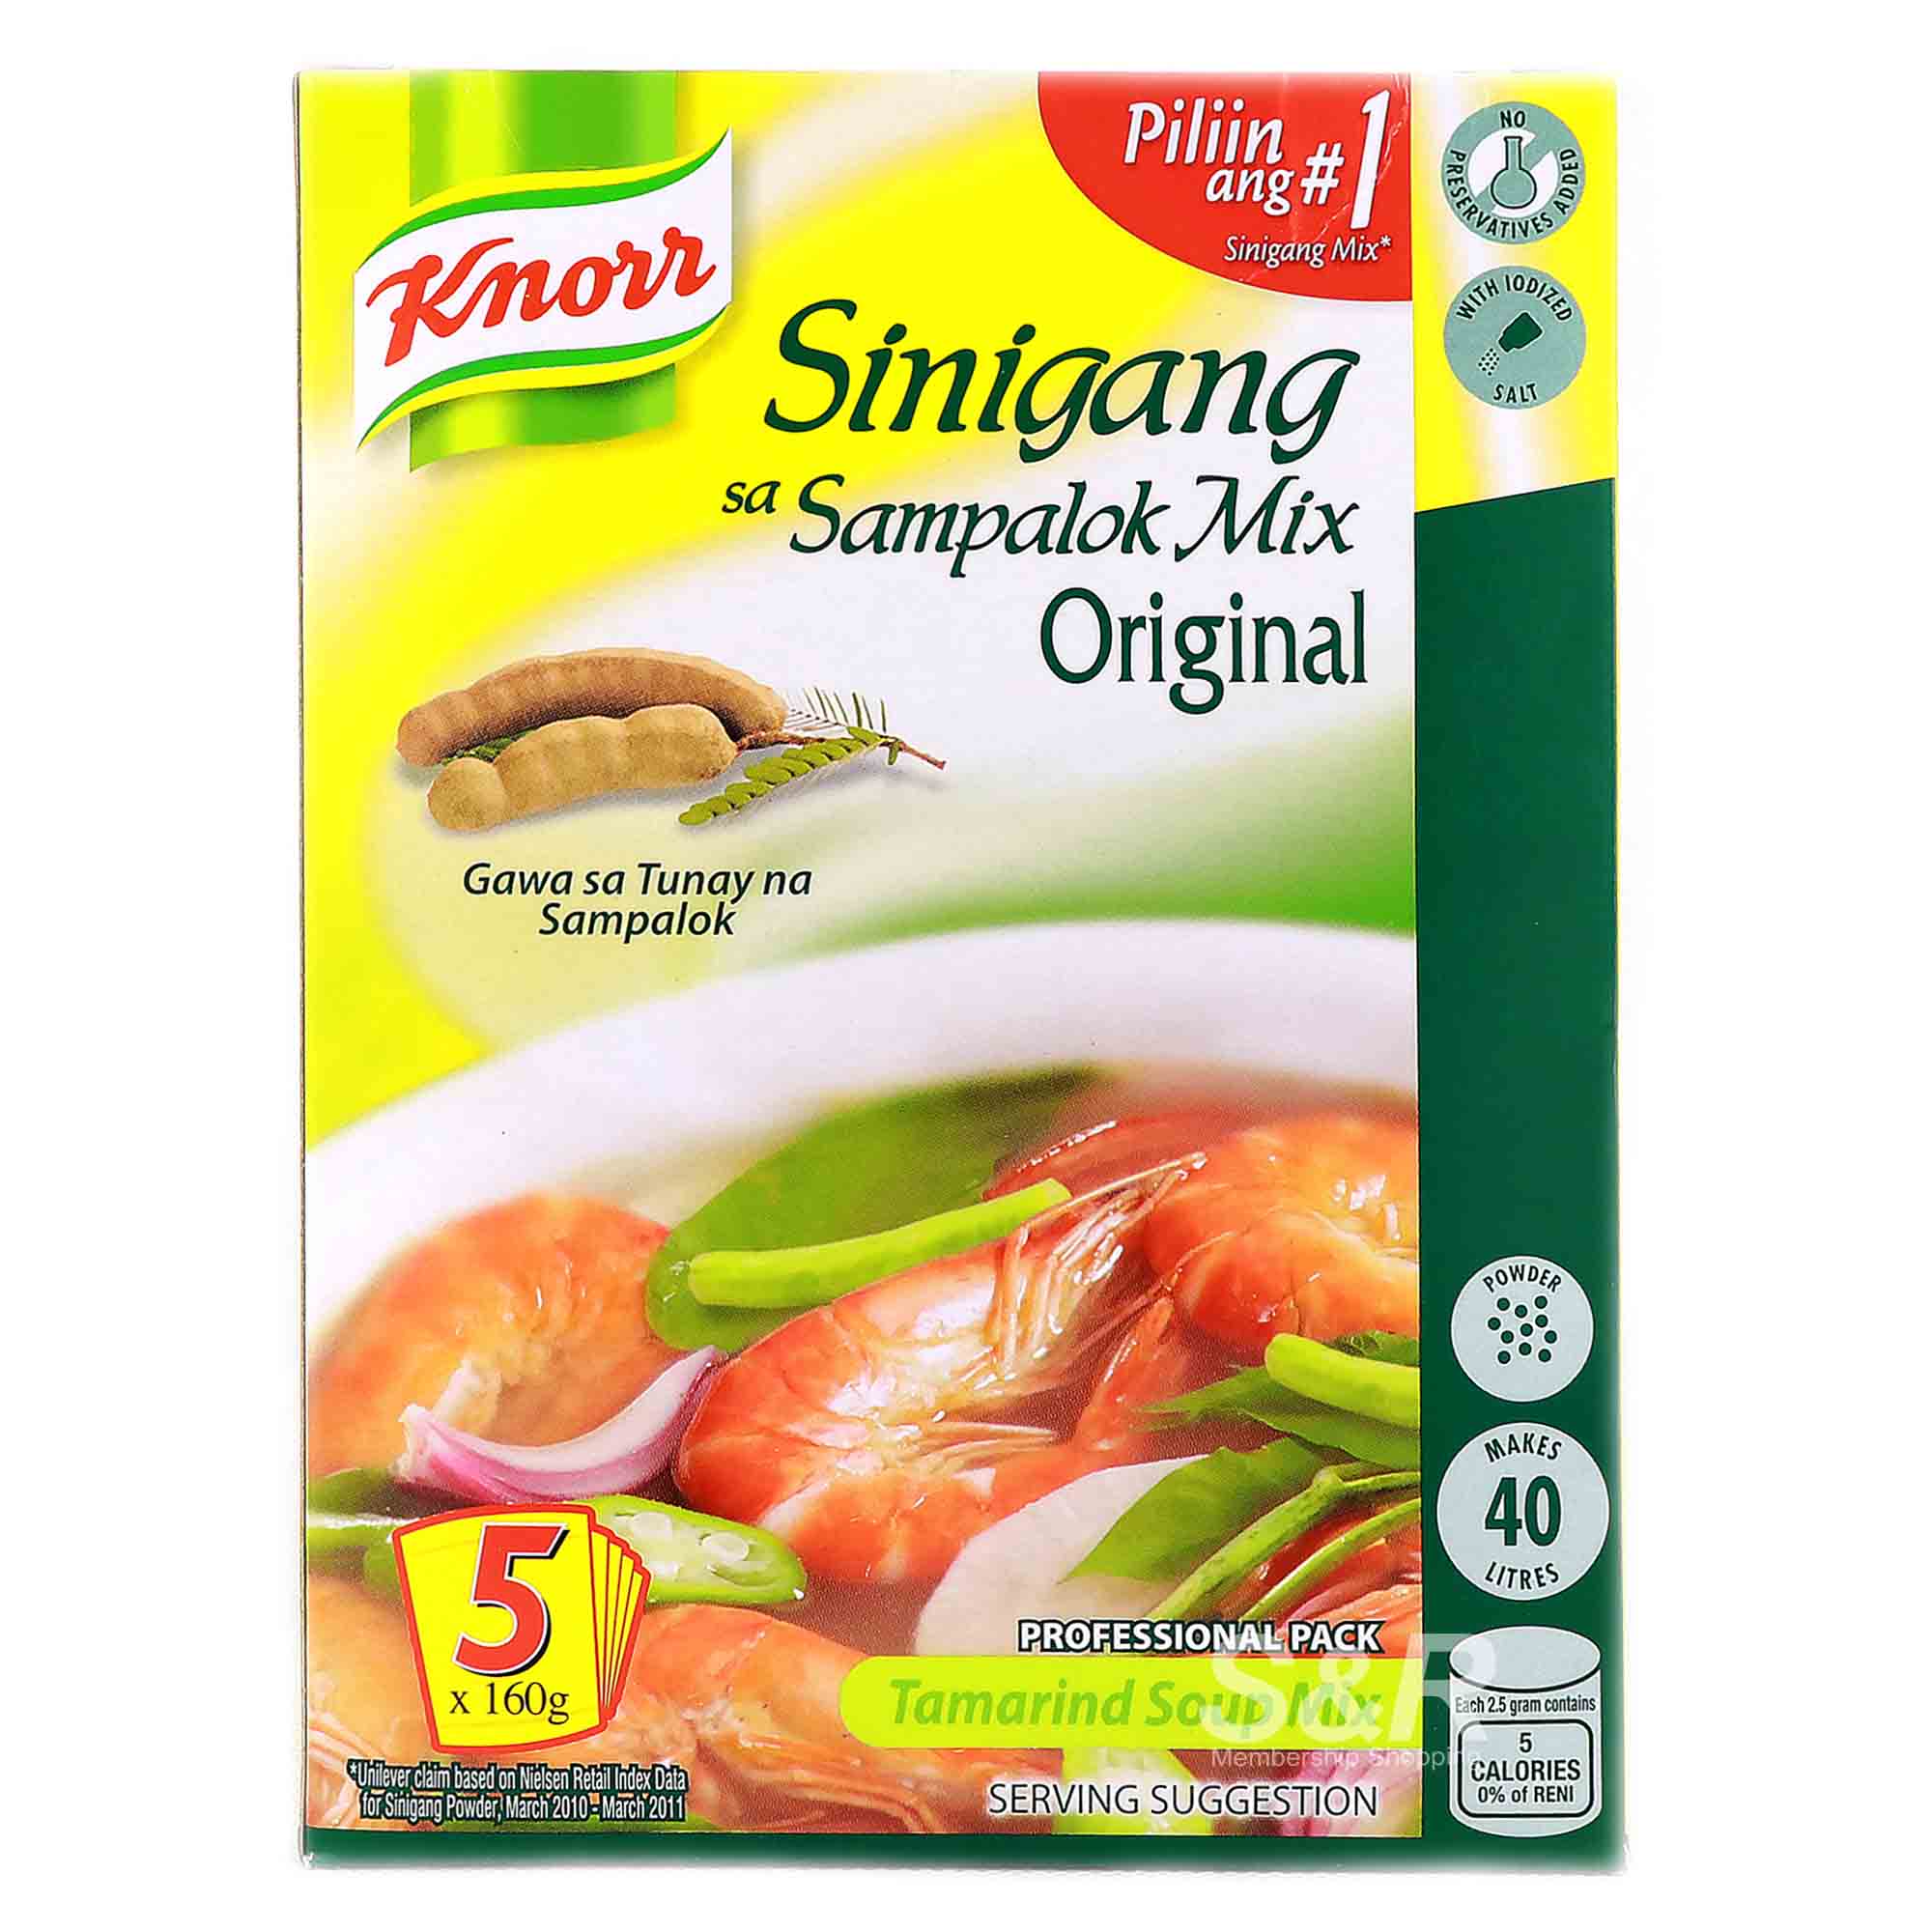 Knorr Sinigang sa Sampaloc Mix Original 5 packs